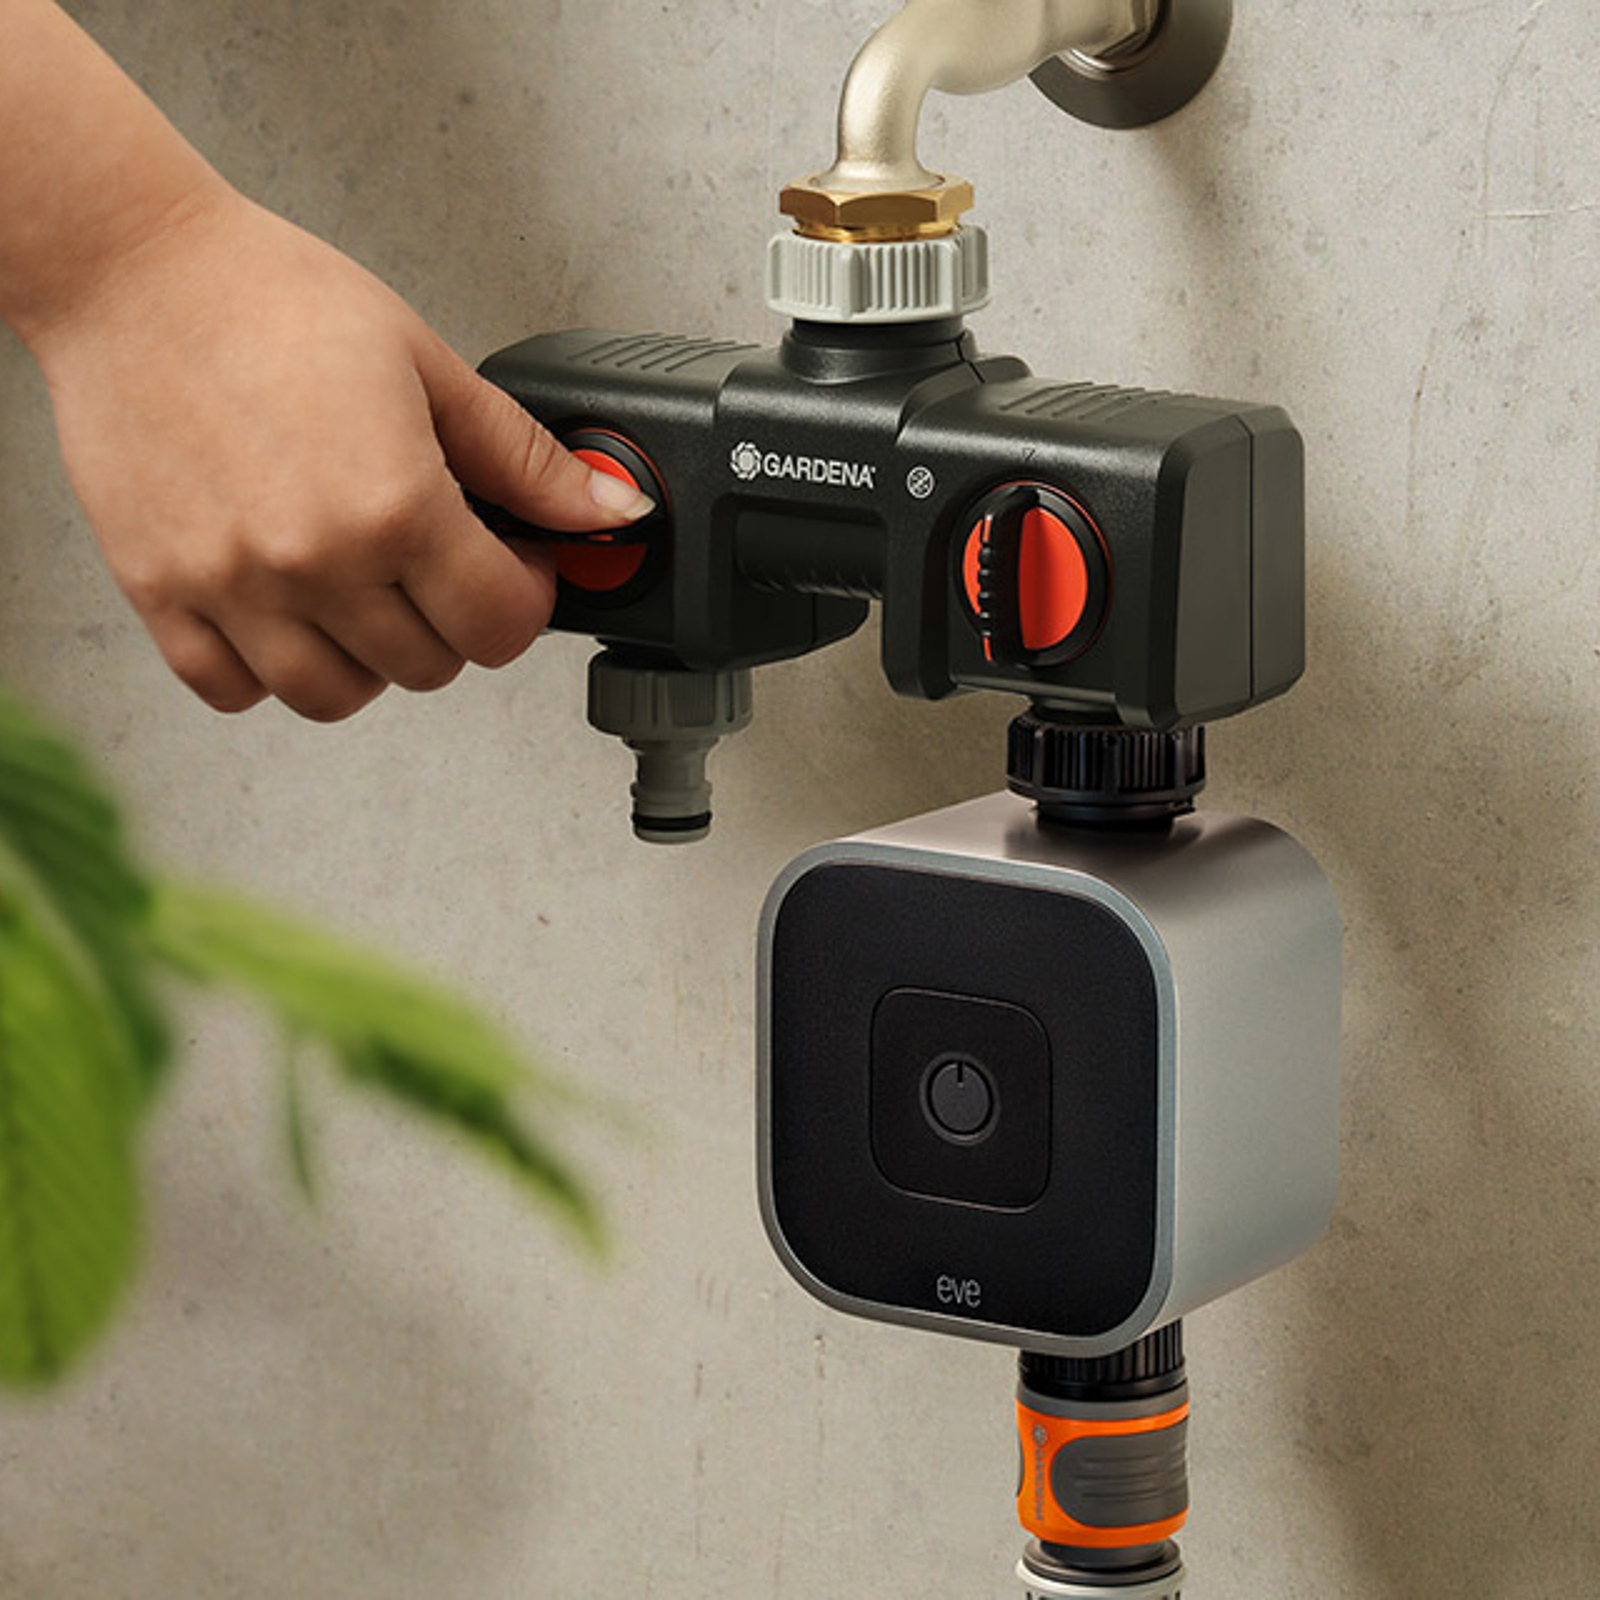 Eve Aqua smart home watering computer